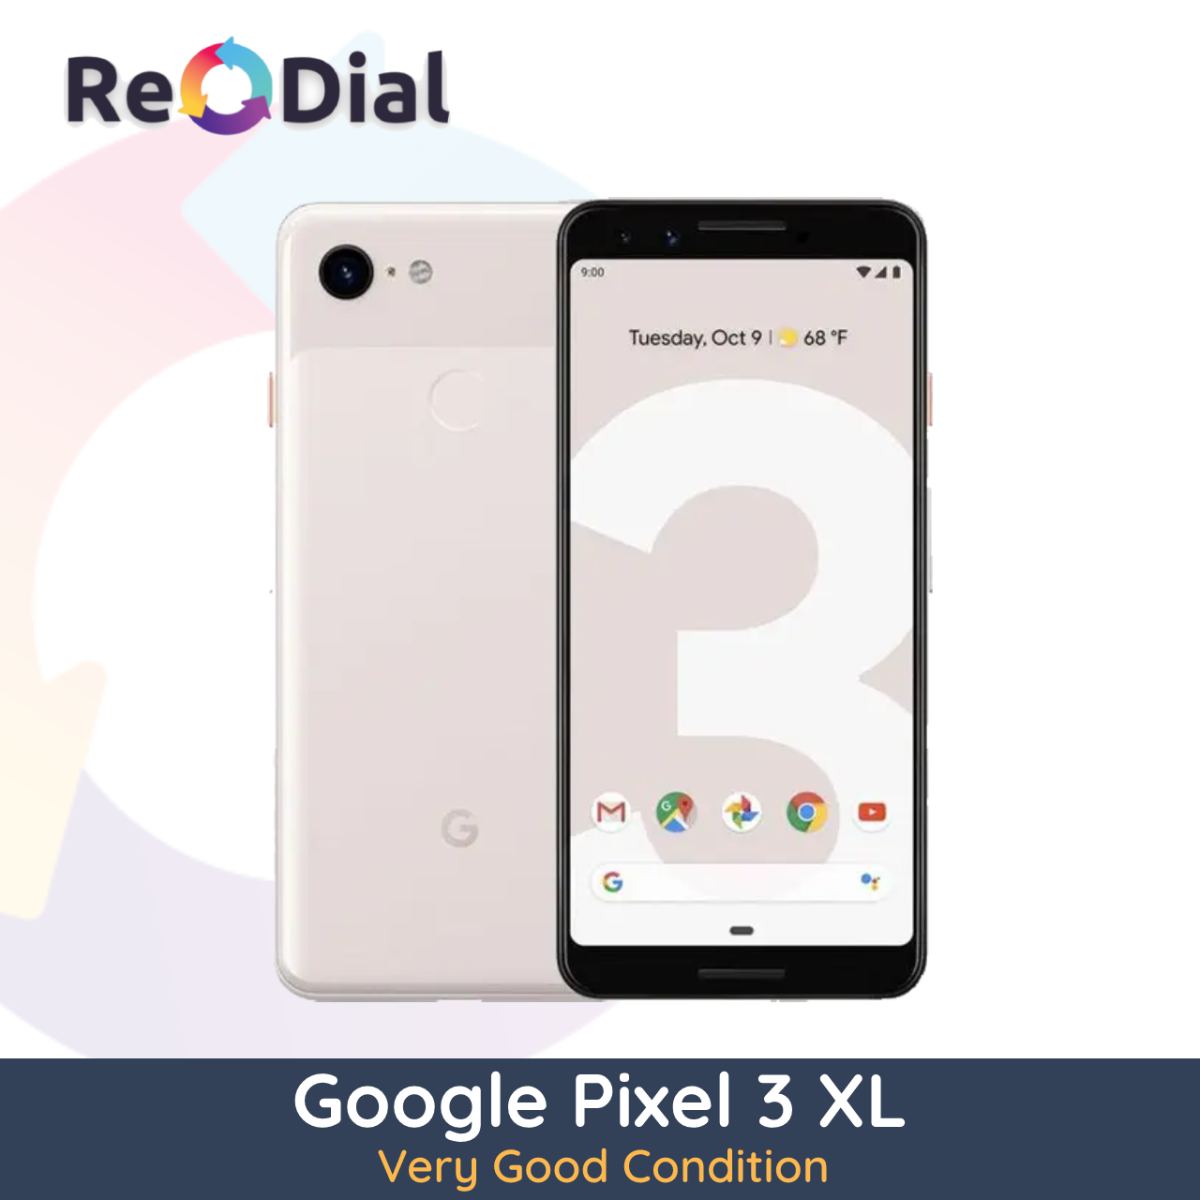 Google Pixel 3 XL - Very Good Condition